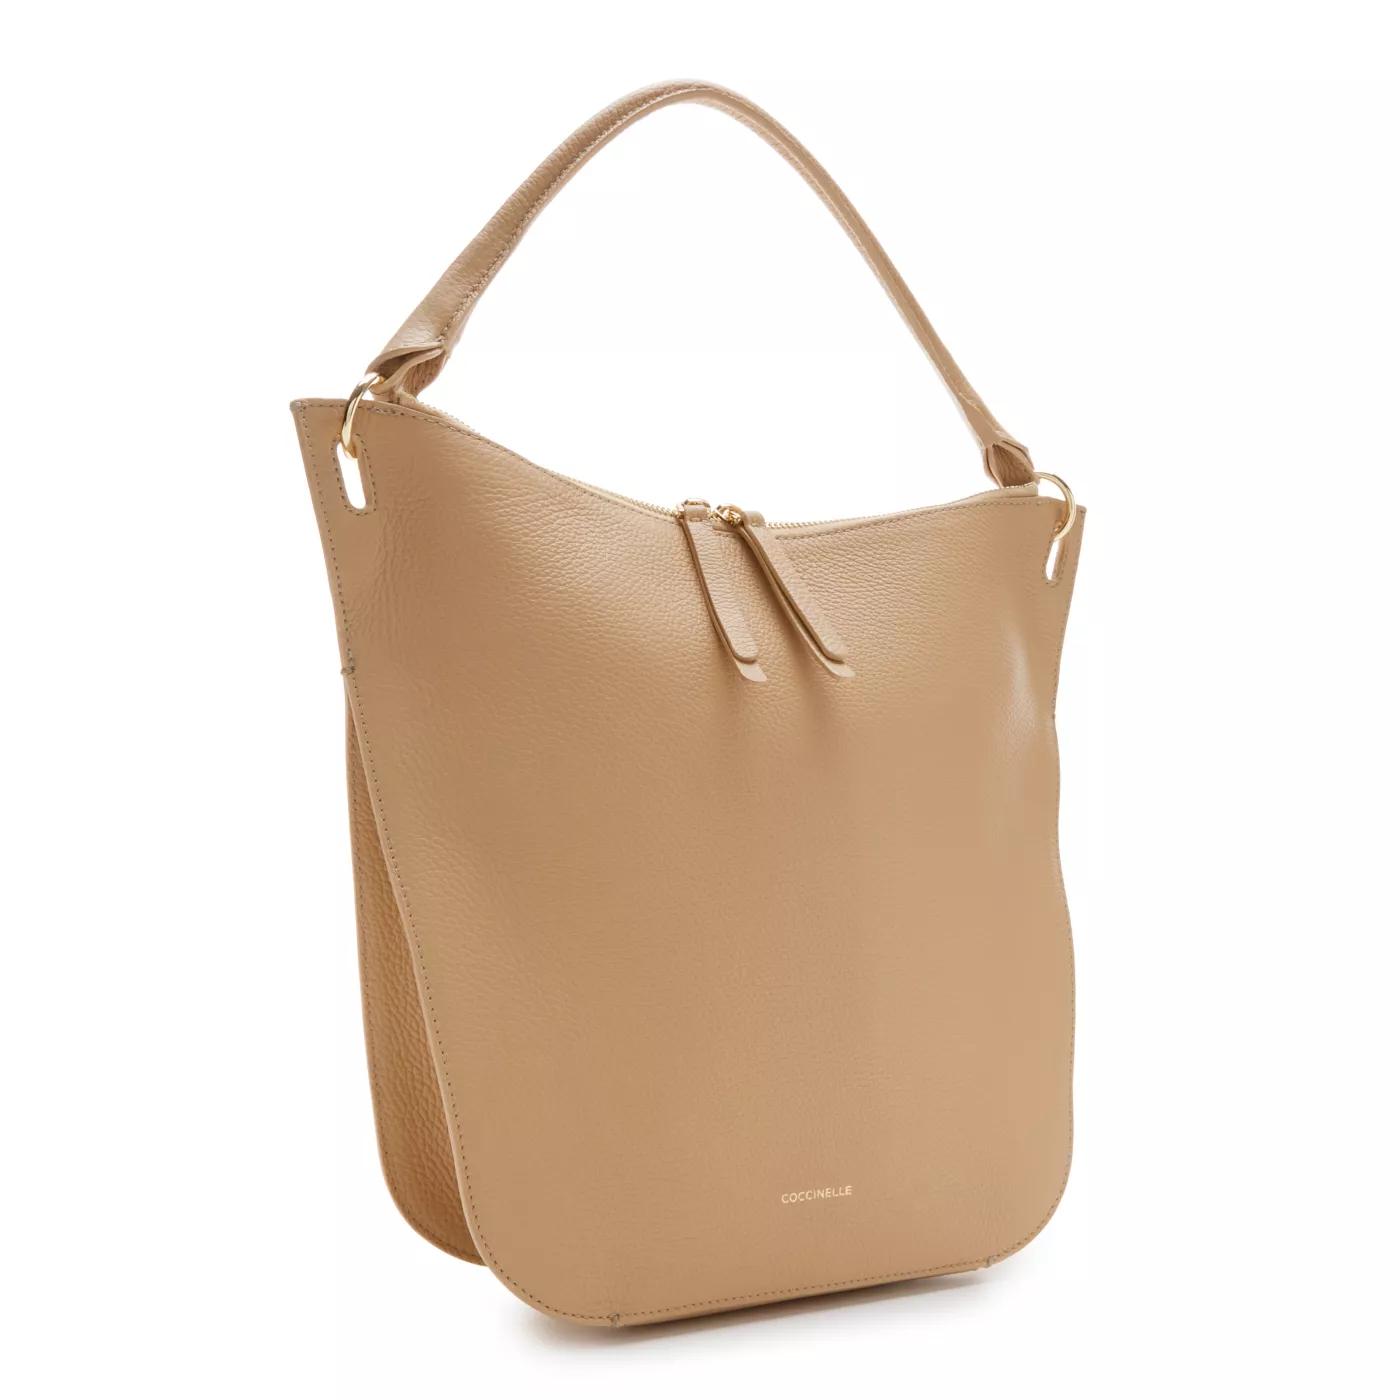 Coccinelle Crossbody bags Flare Beige Leder Handtasche E1Q2K13020 in beige